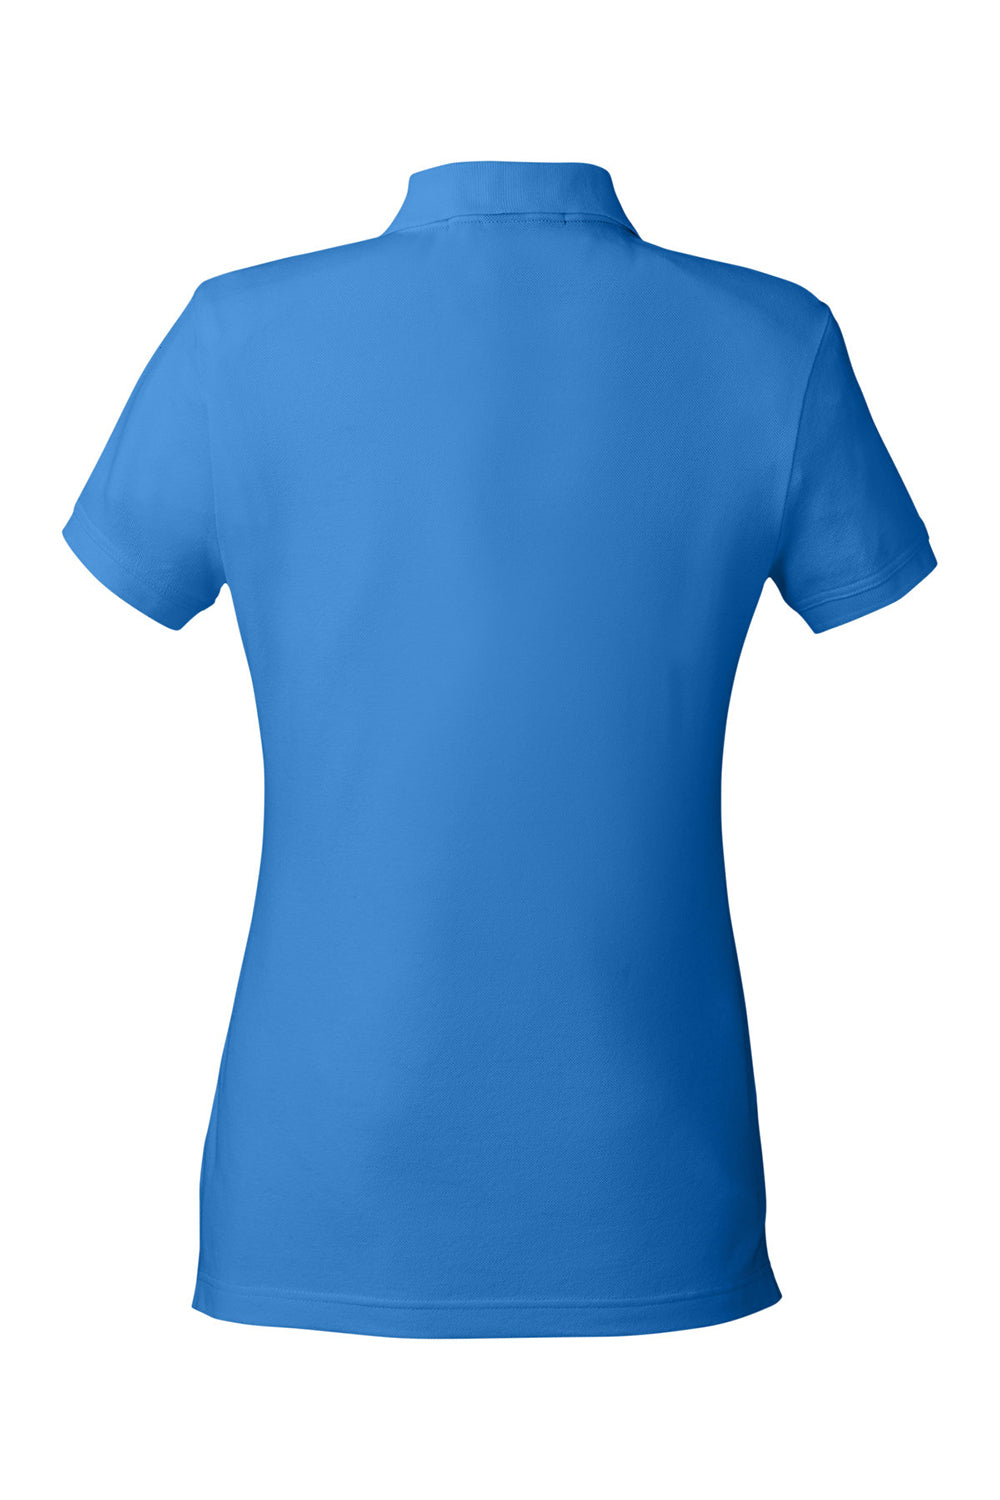 Devon & Jones DG100W Womens New Classics Performance Moisture Wicking Short Sleeve Polo Shirt French Blue Flat Back